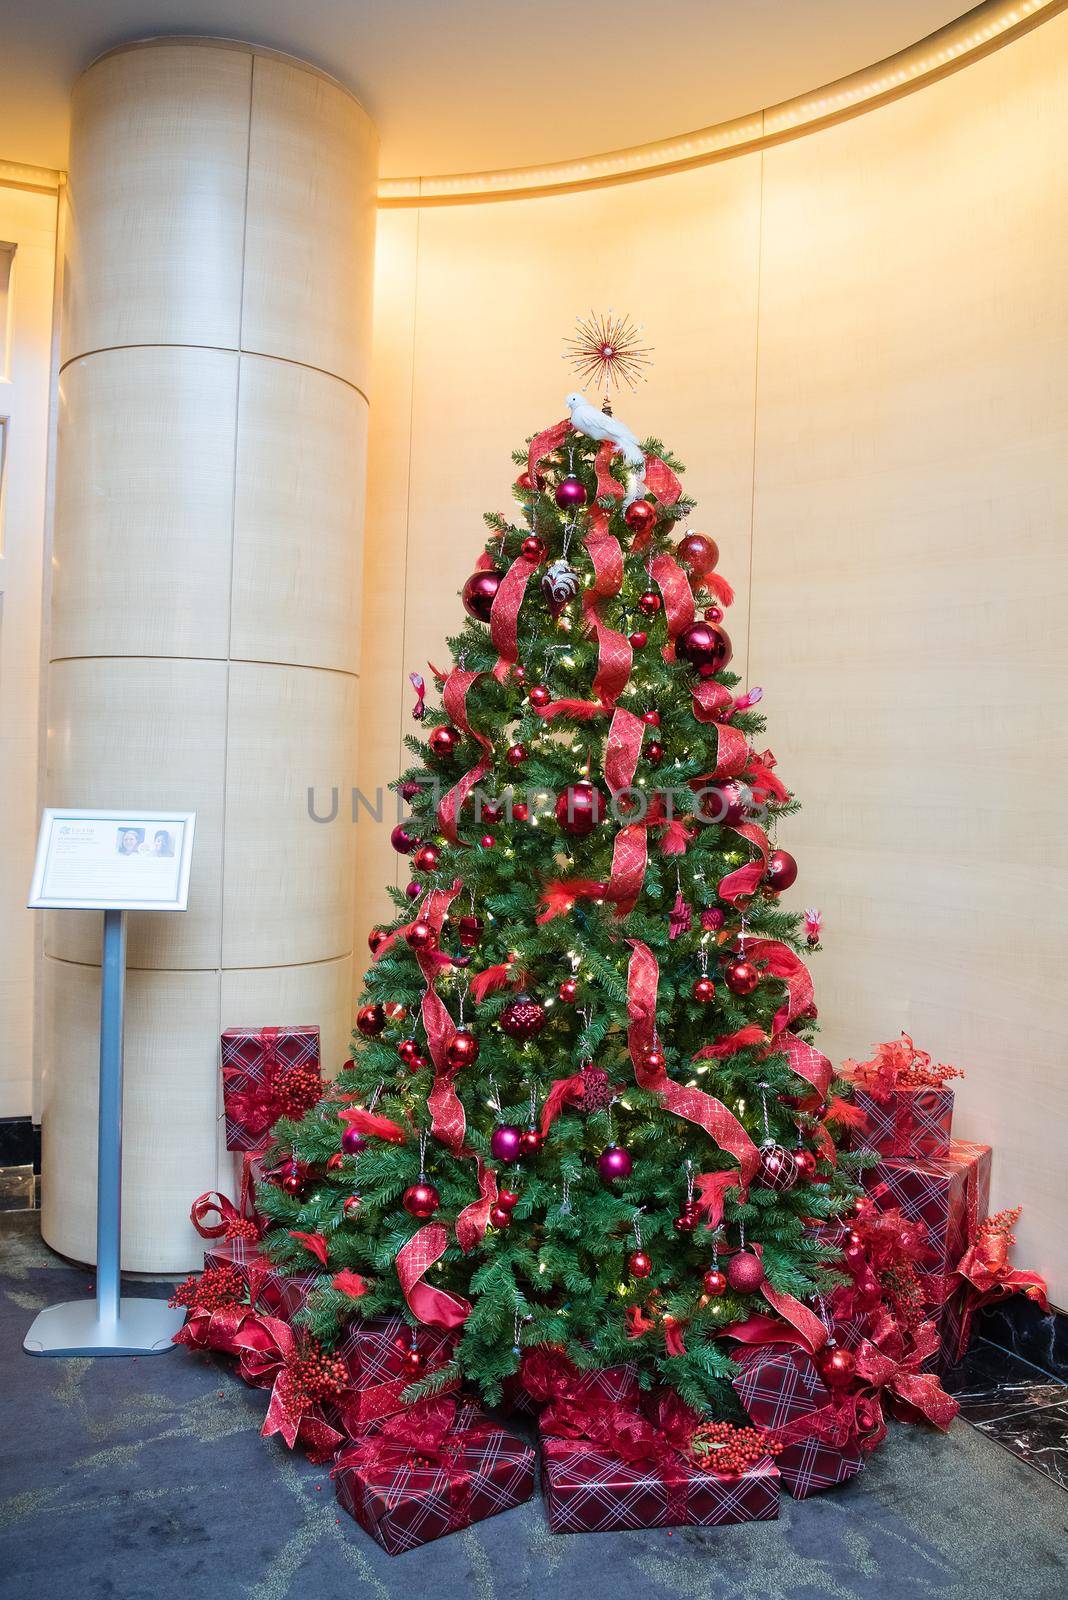 Custom made Christmas tree contest at hotel in Washington DC